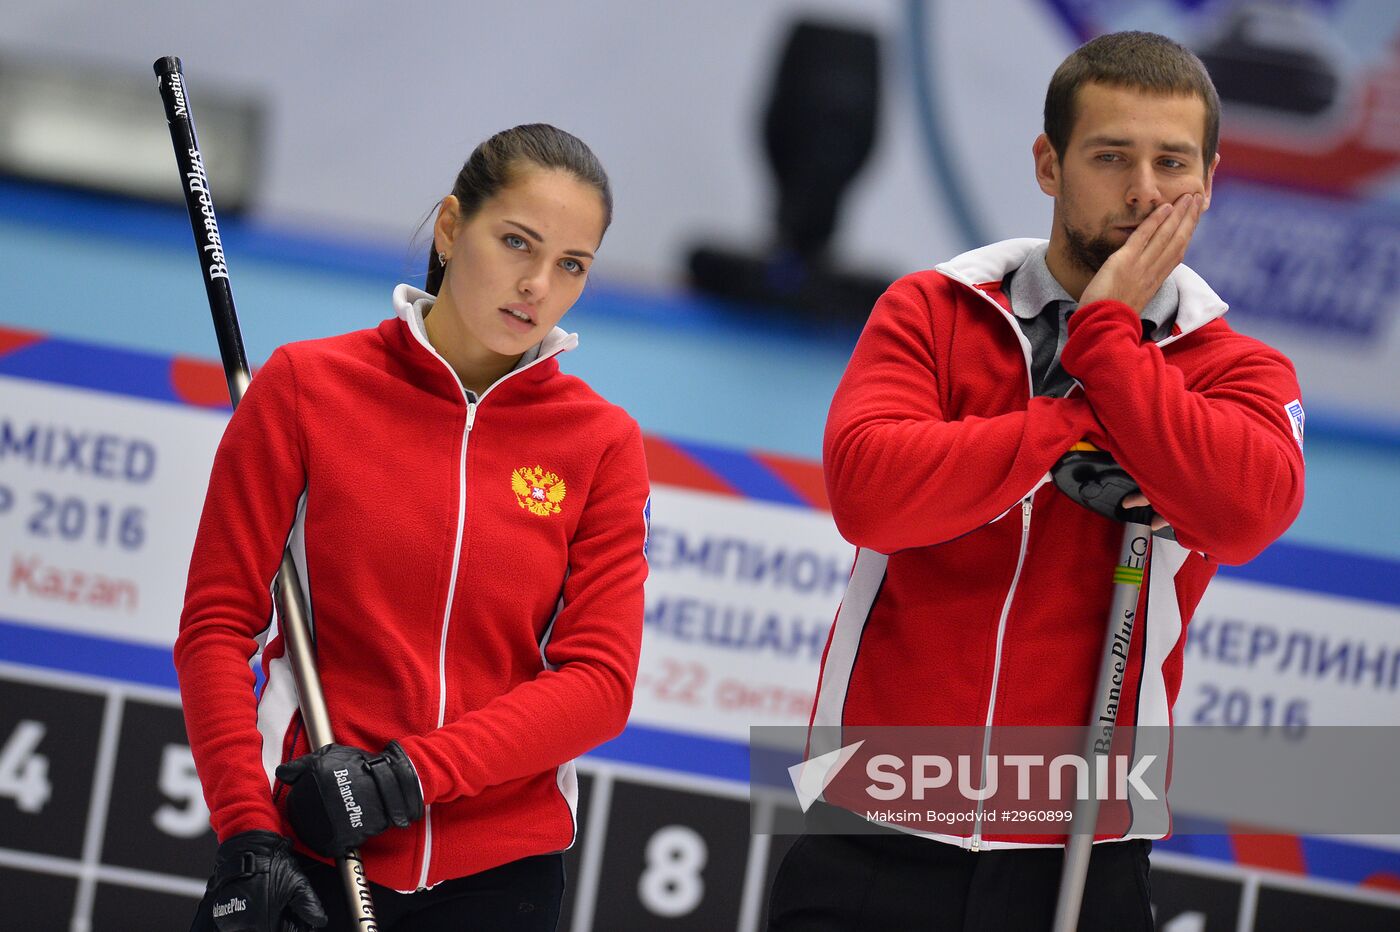 Russian women's national curling team